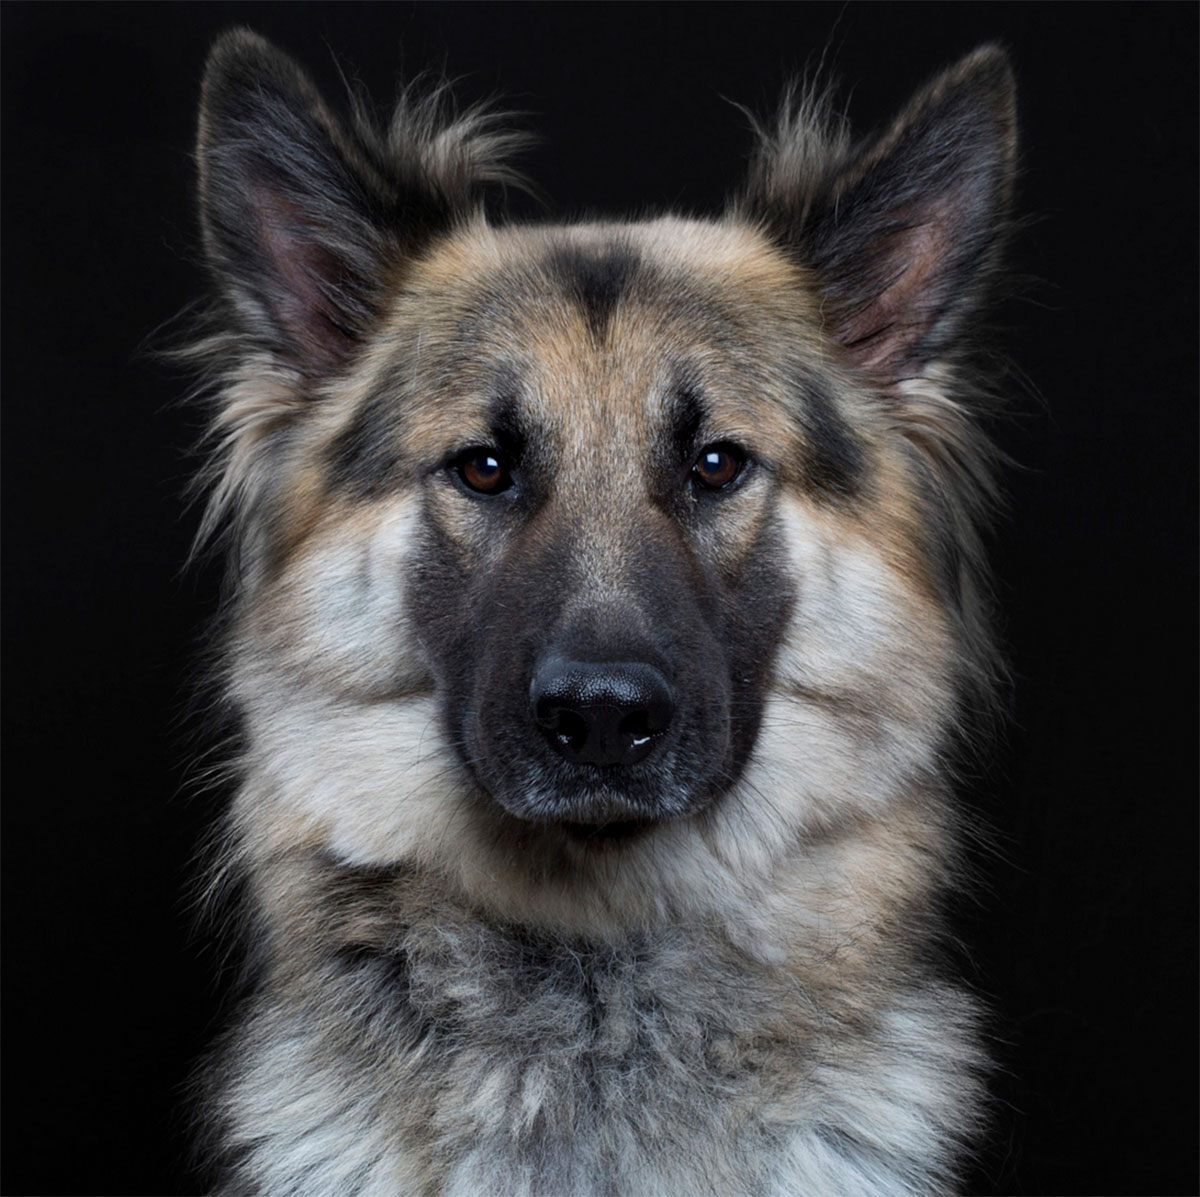 Dog Portrait 4